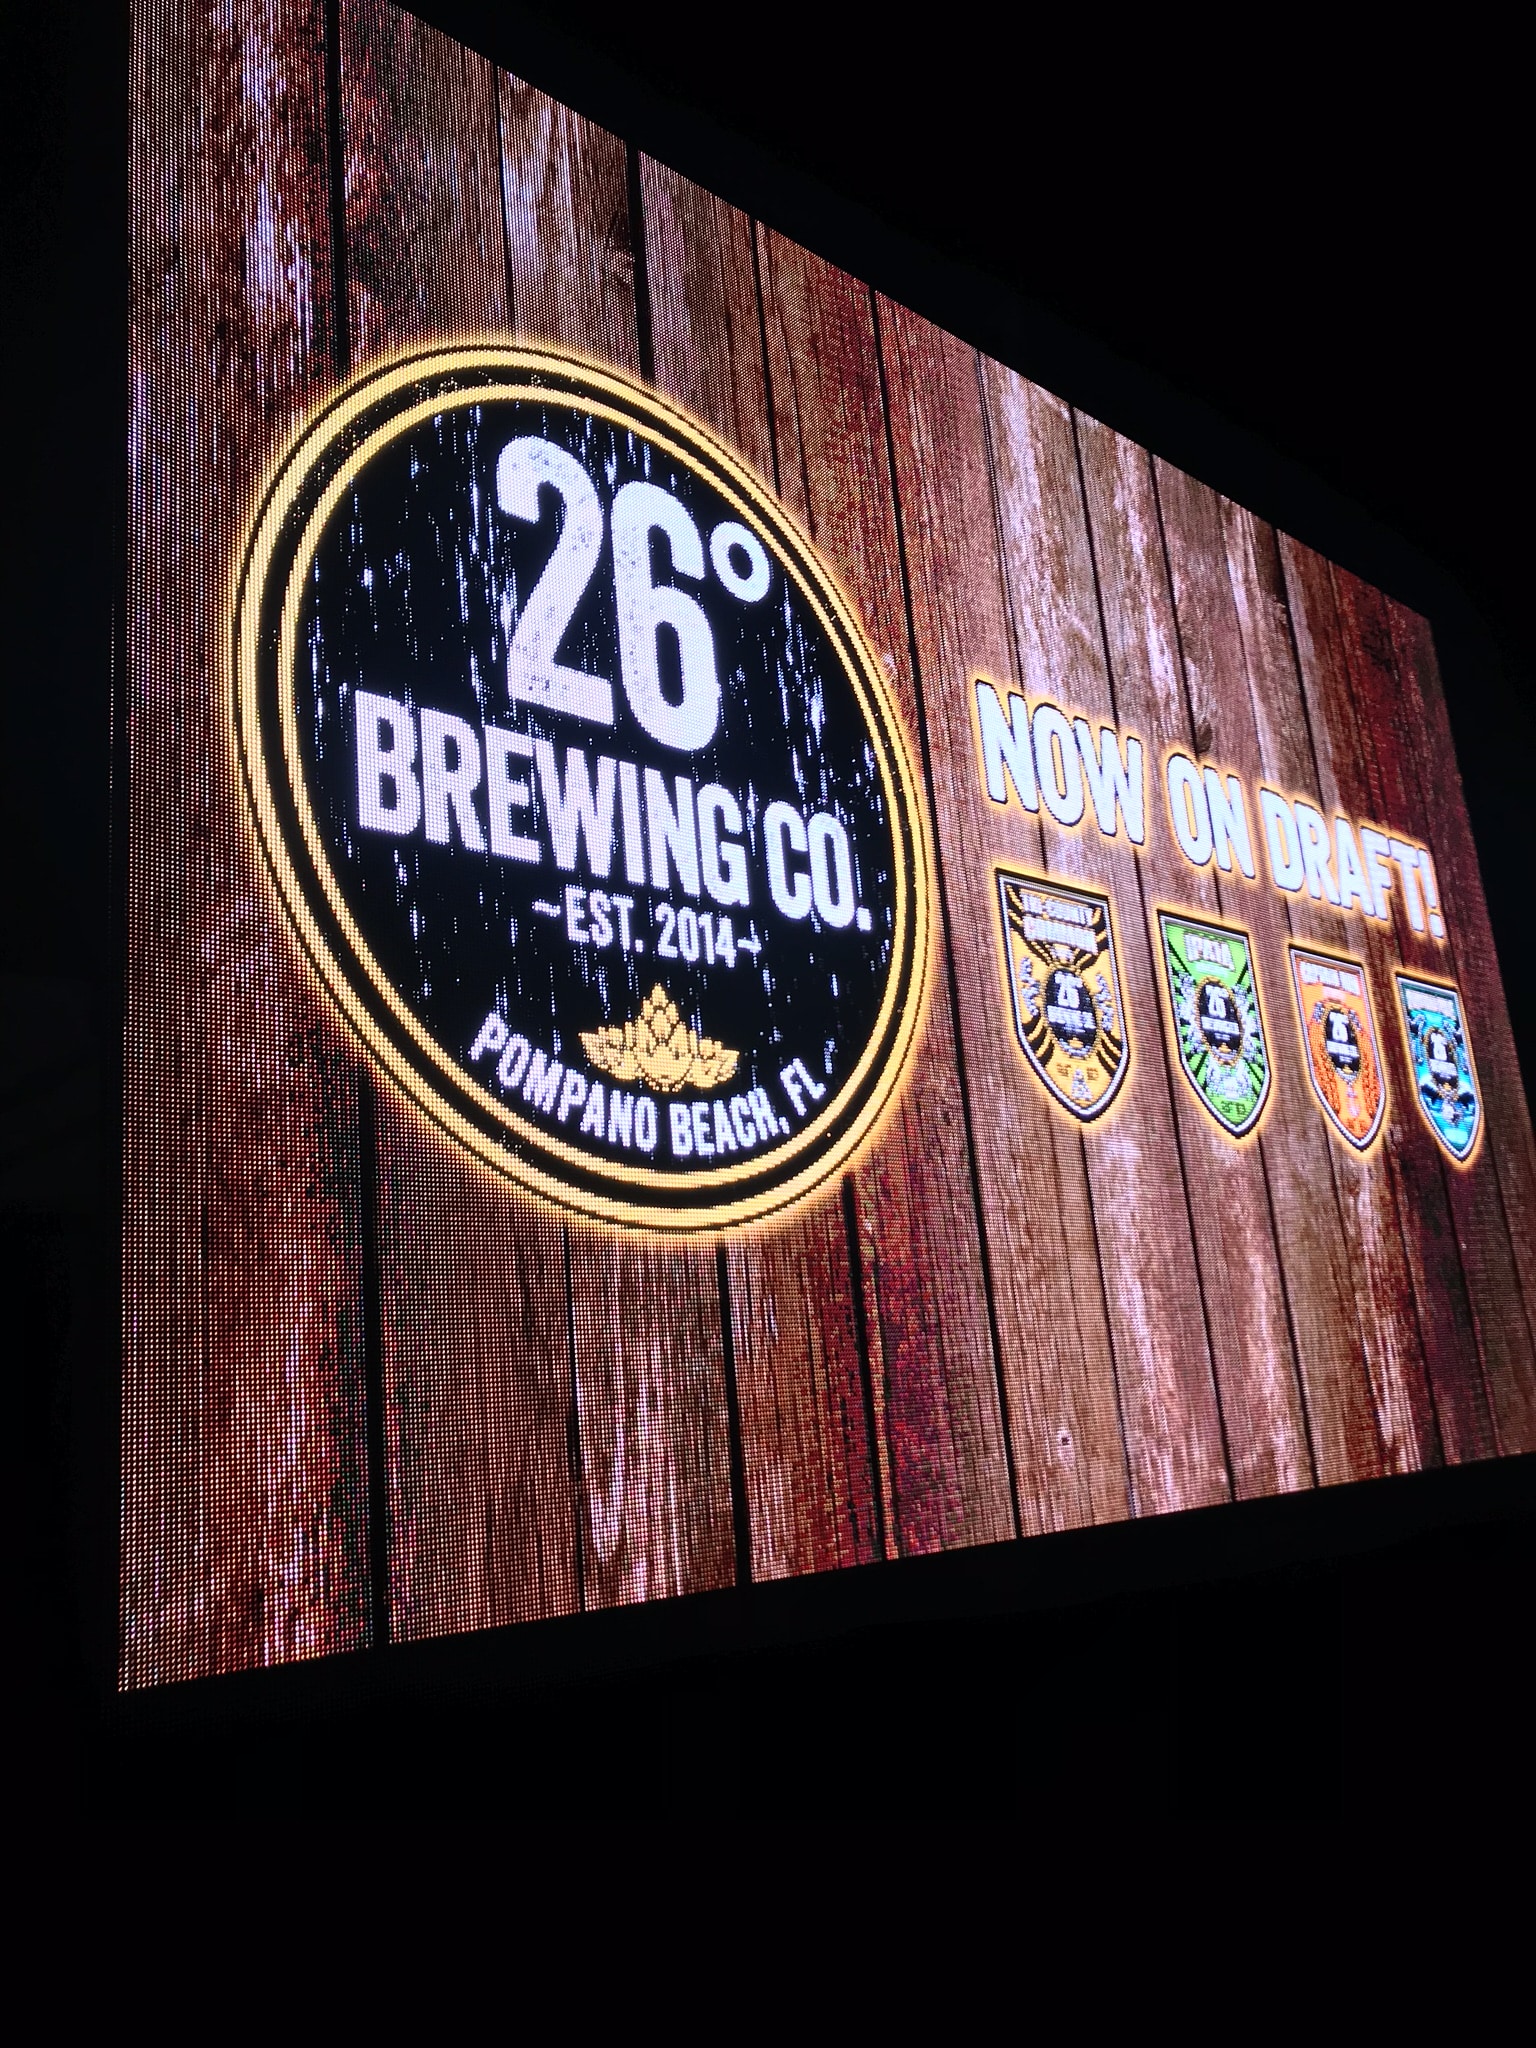 26 degree brewery